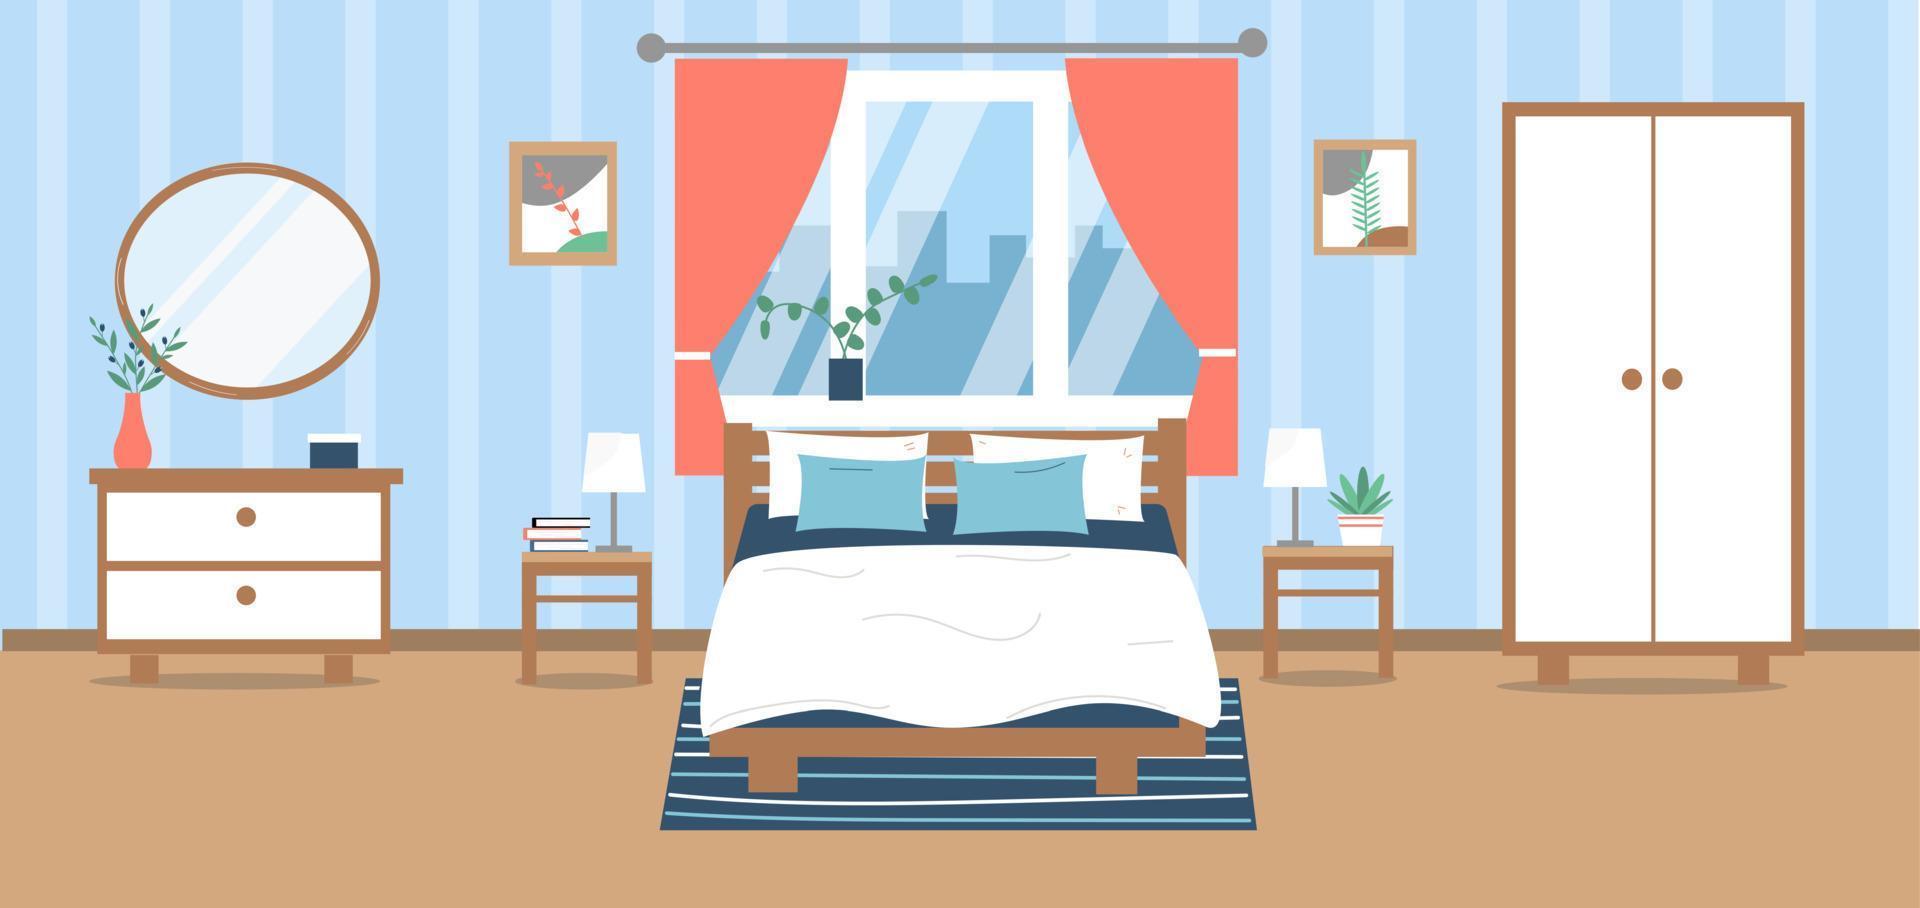 Modern bedroom interior. Bed, wardrobe, wardrobe, plants, pictures, decoration. Vector illustration in flat style.